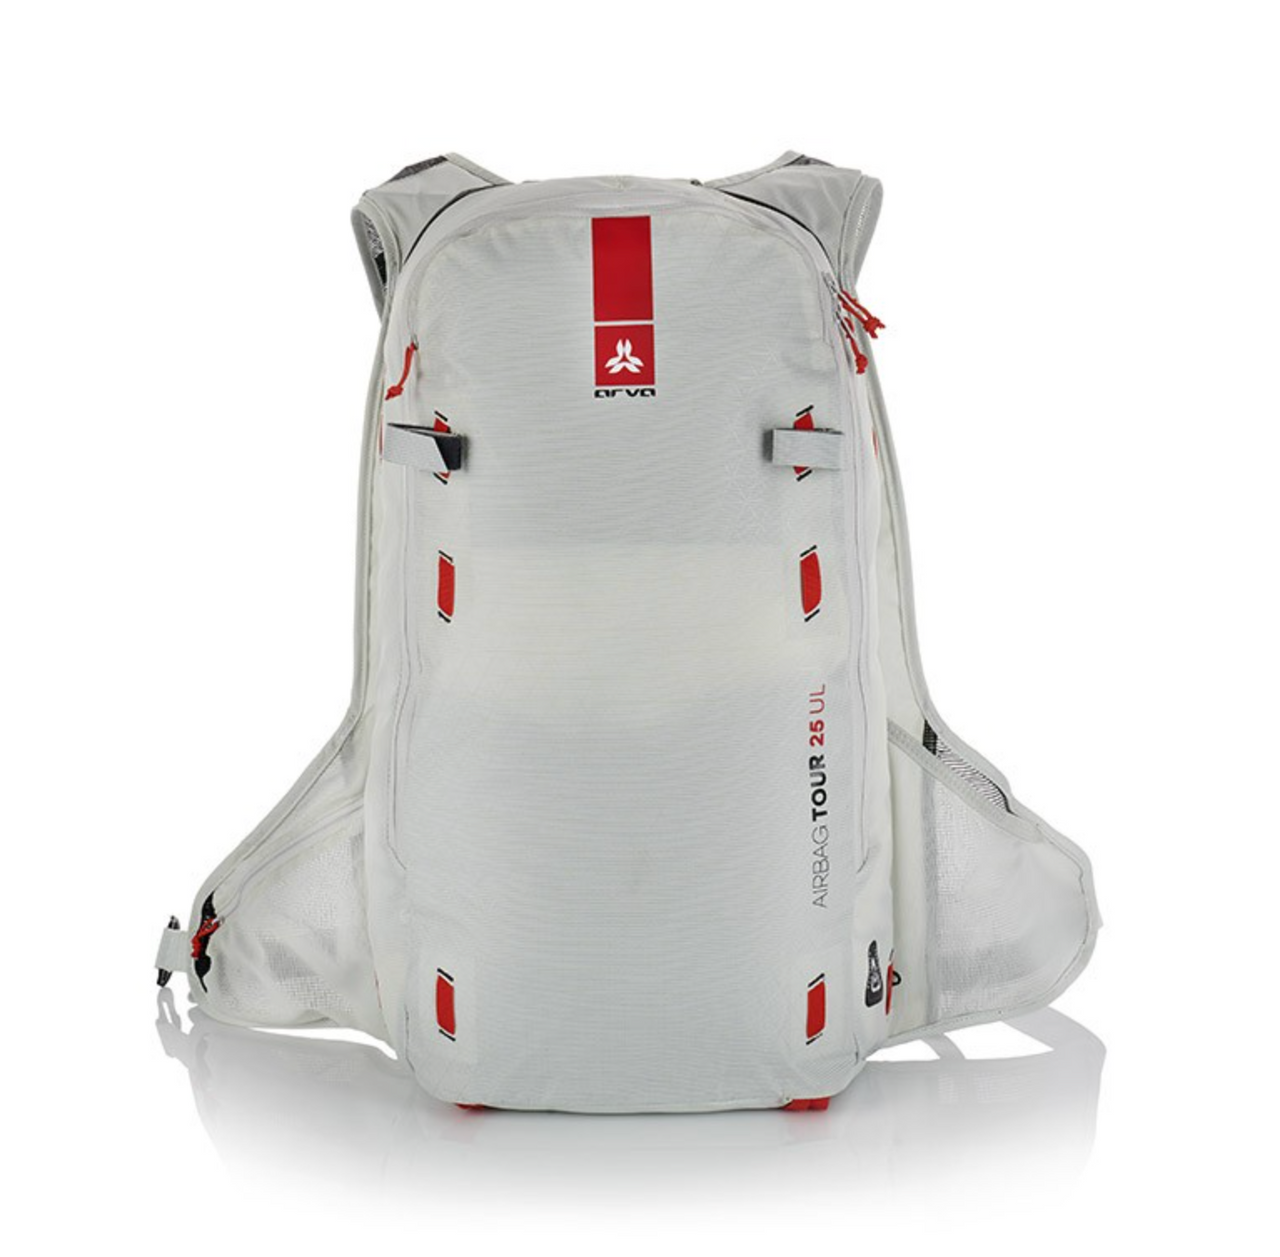 Arva Reactor 25 Tour Airbag Backpack - Foggy Grey